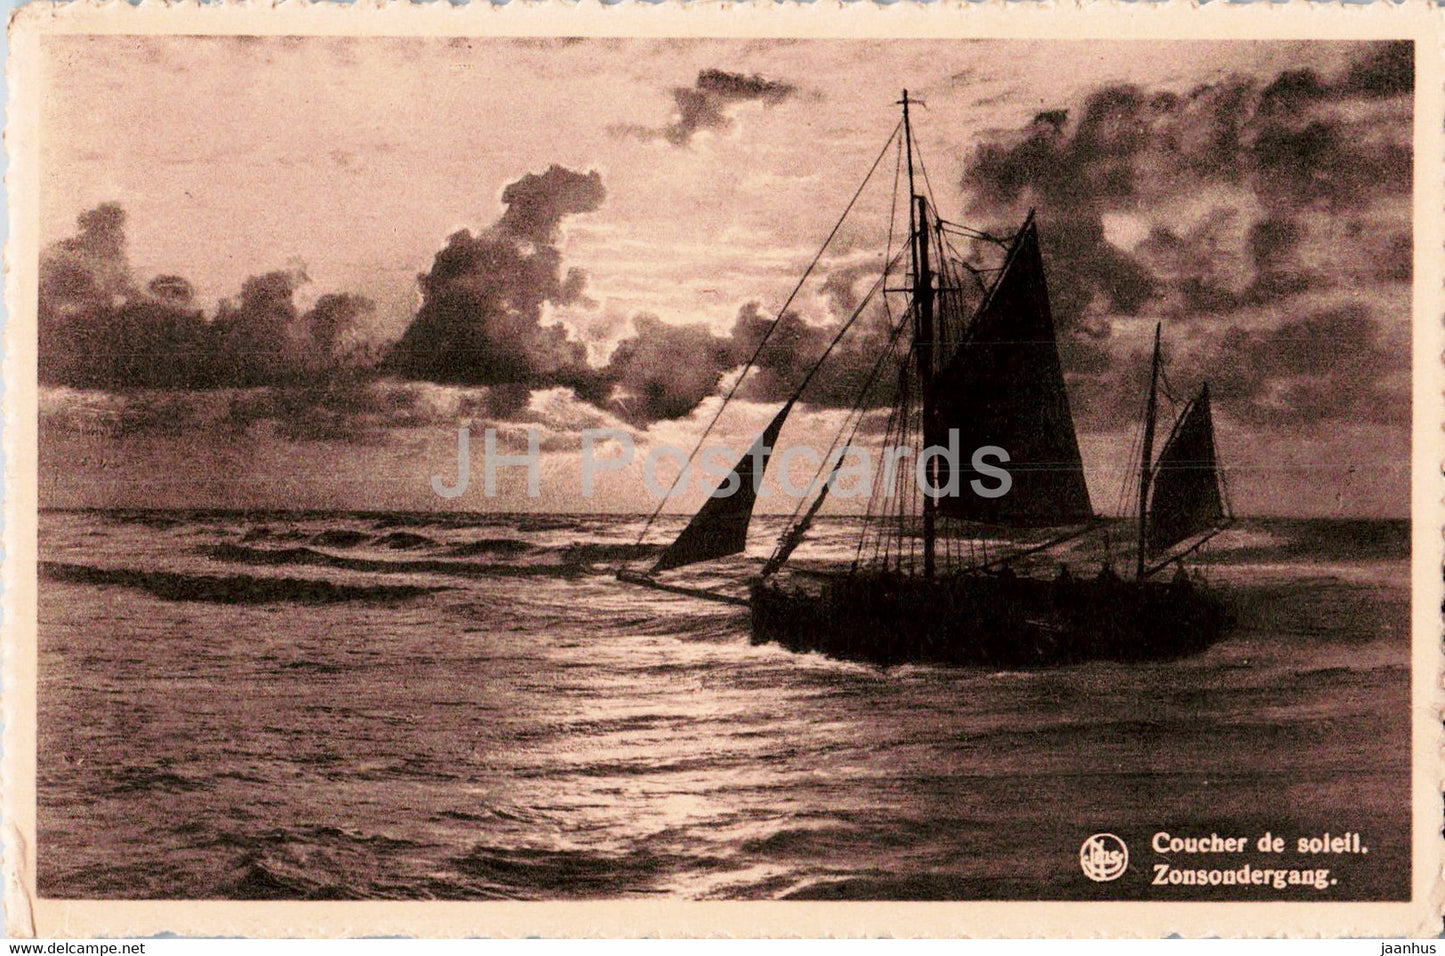 Wenduine - Coucher de soleil - Zonsondergang - sailing ship - old postcard - 1951 - Belgium - used - JH Postcards